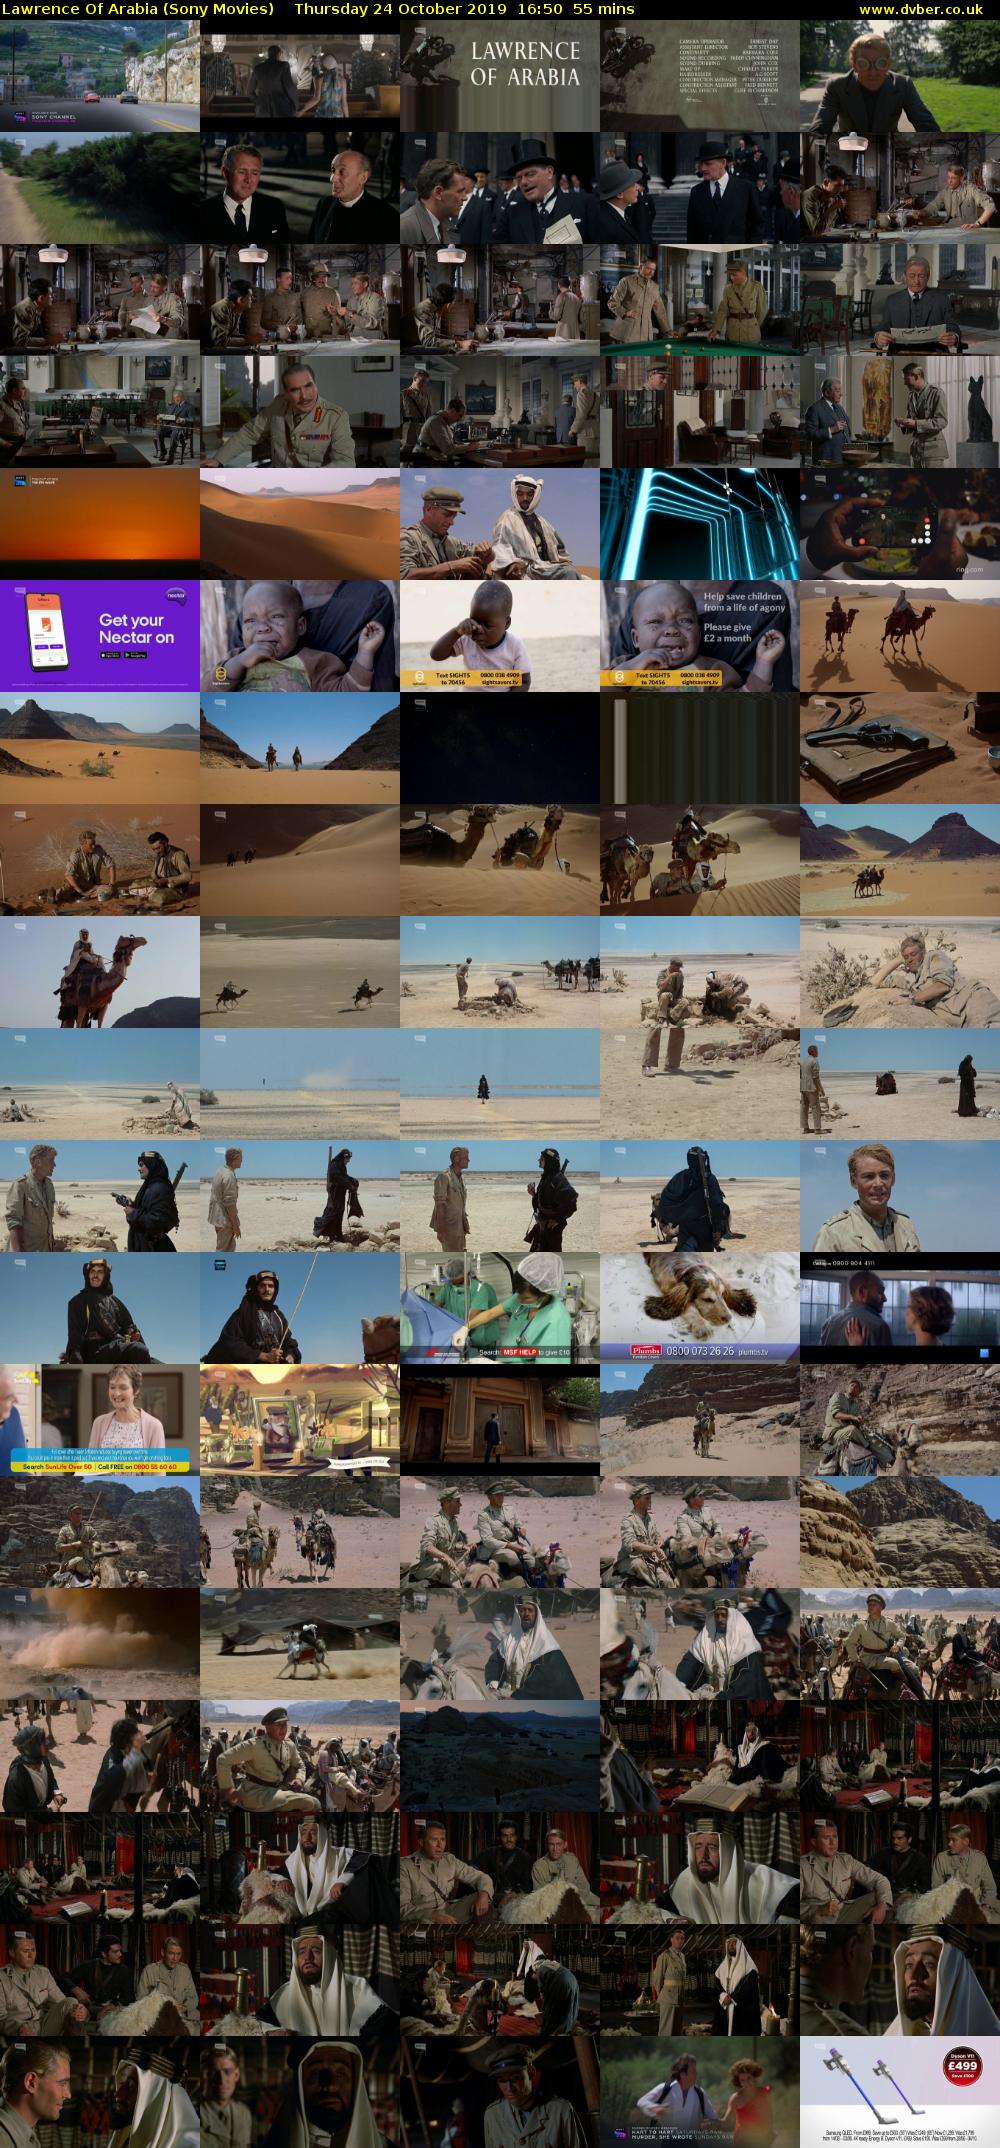 Lawrence Of Arabia (Sony Movies) Thursday 24 October 2019 16:50 - 17:45